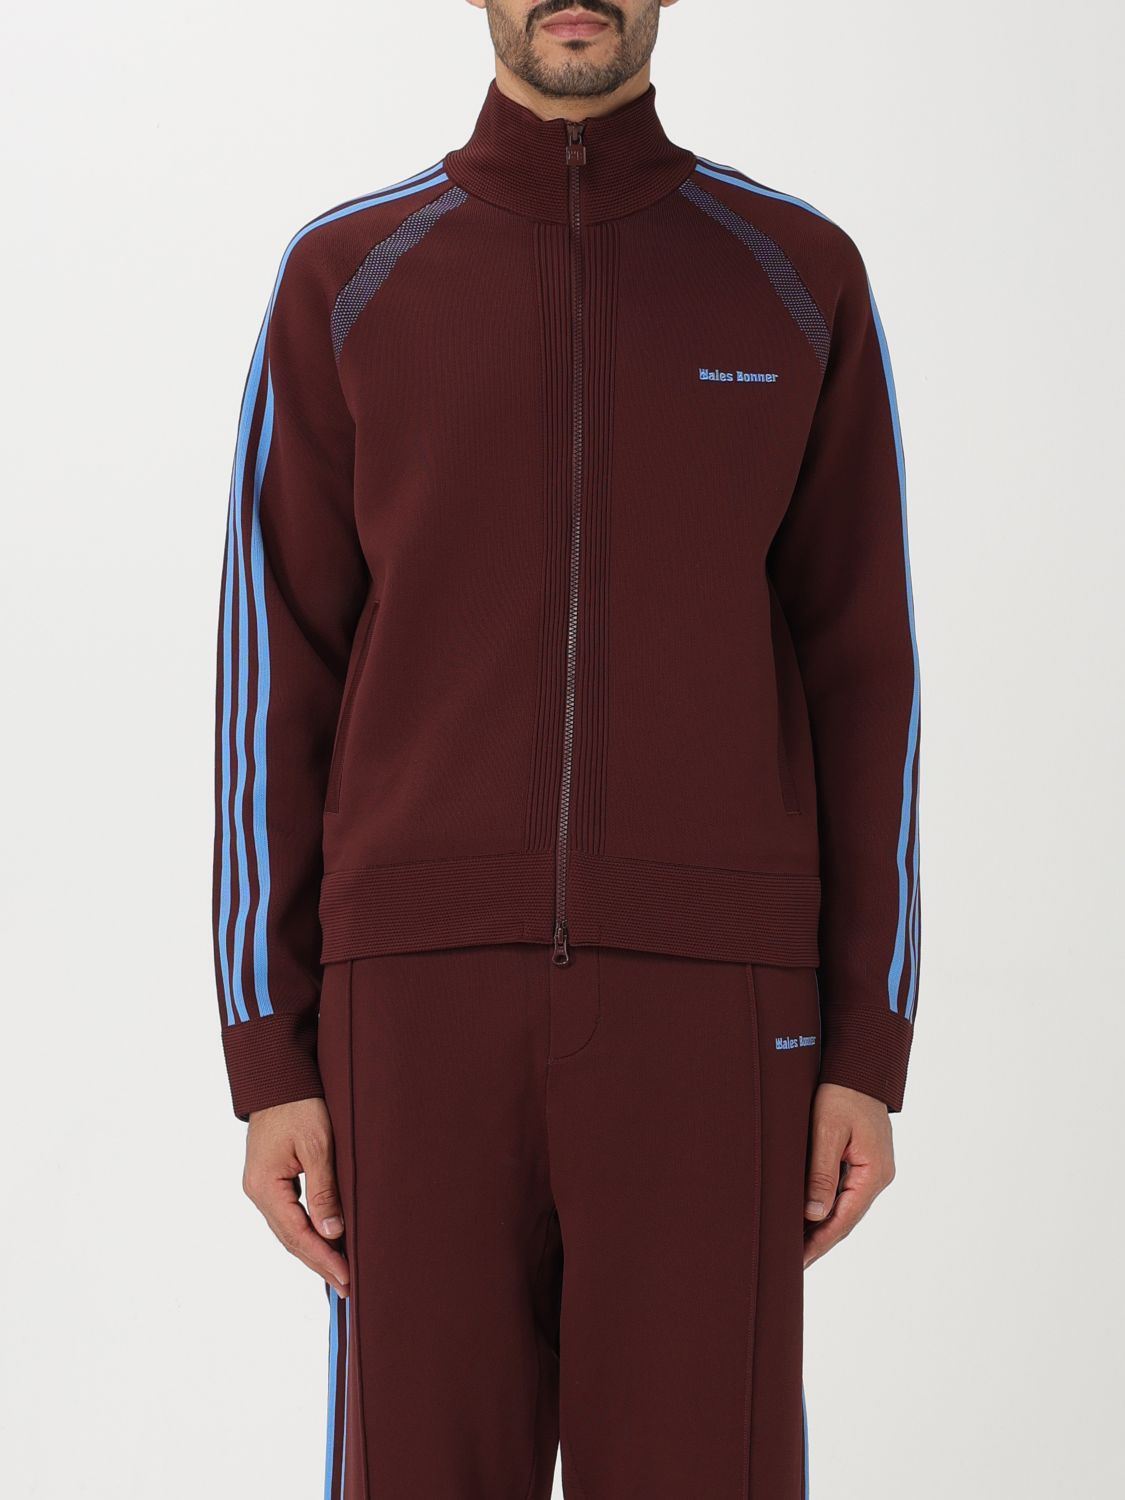 Adidas Originals By Wales Bonner Sweatshirt ADIDAS ORIGINALS BY WALES BONNER Men colour Brown